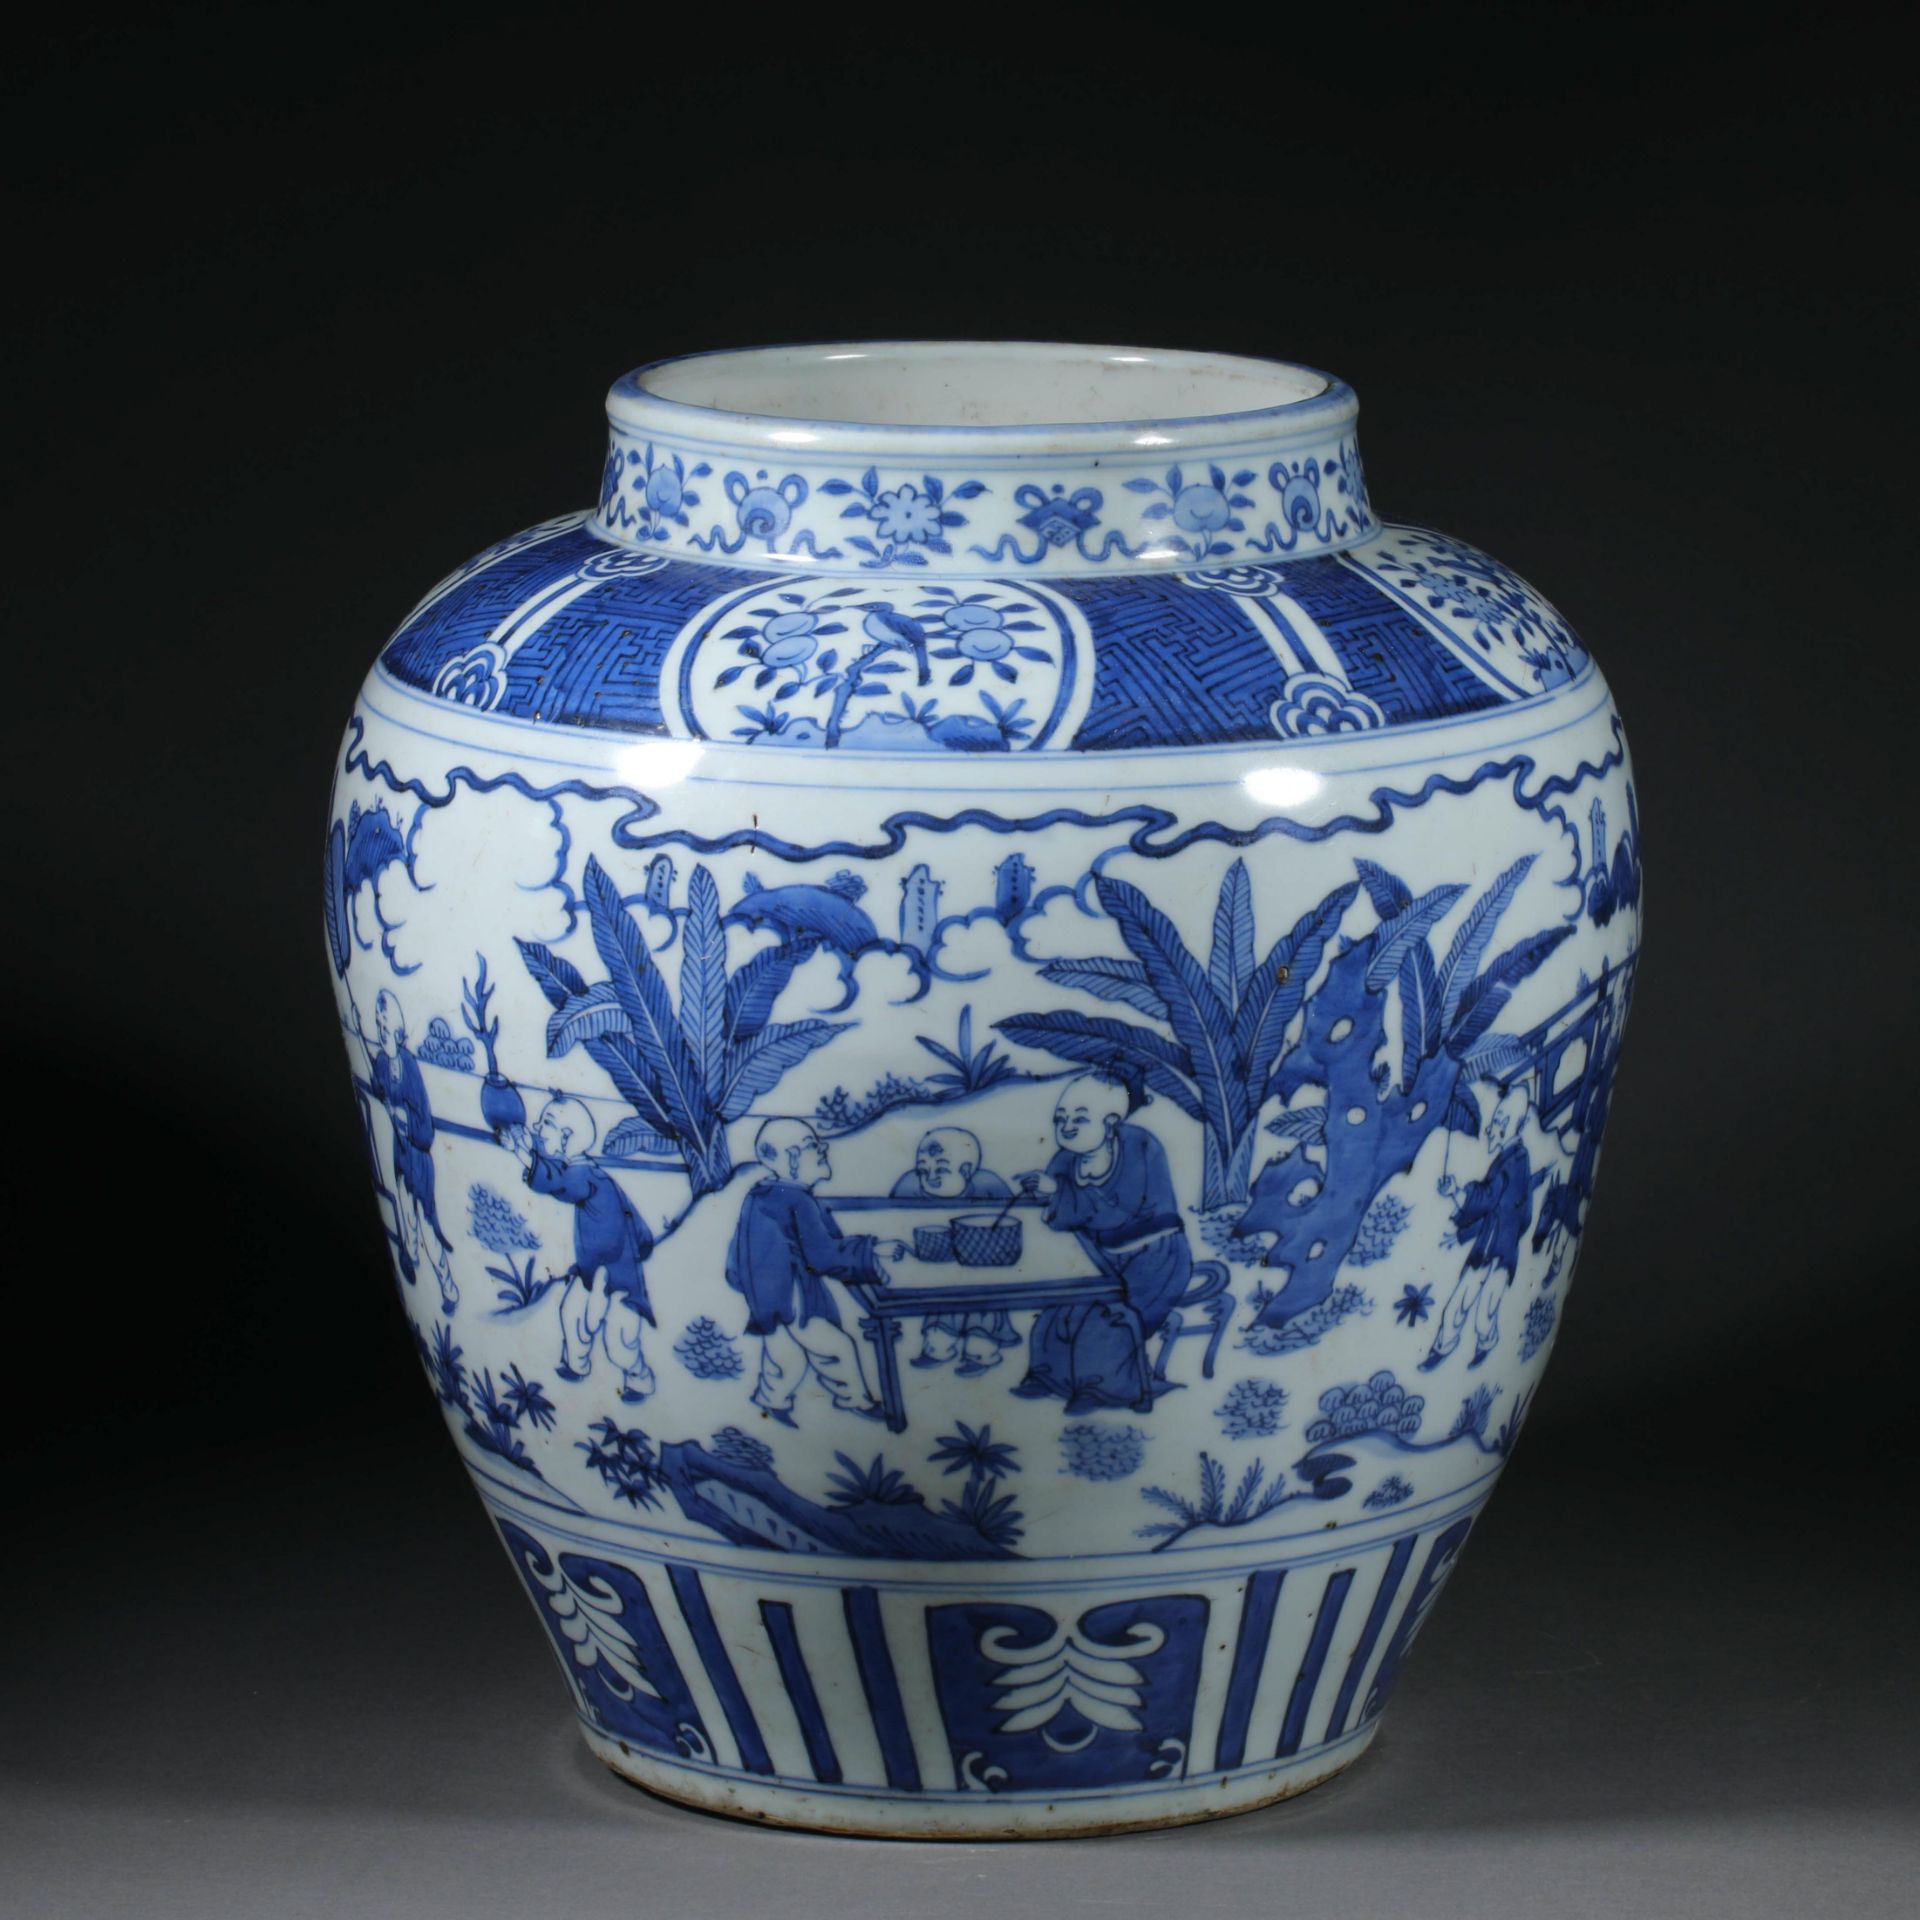 Blue and white porcelain figure jar